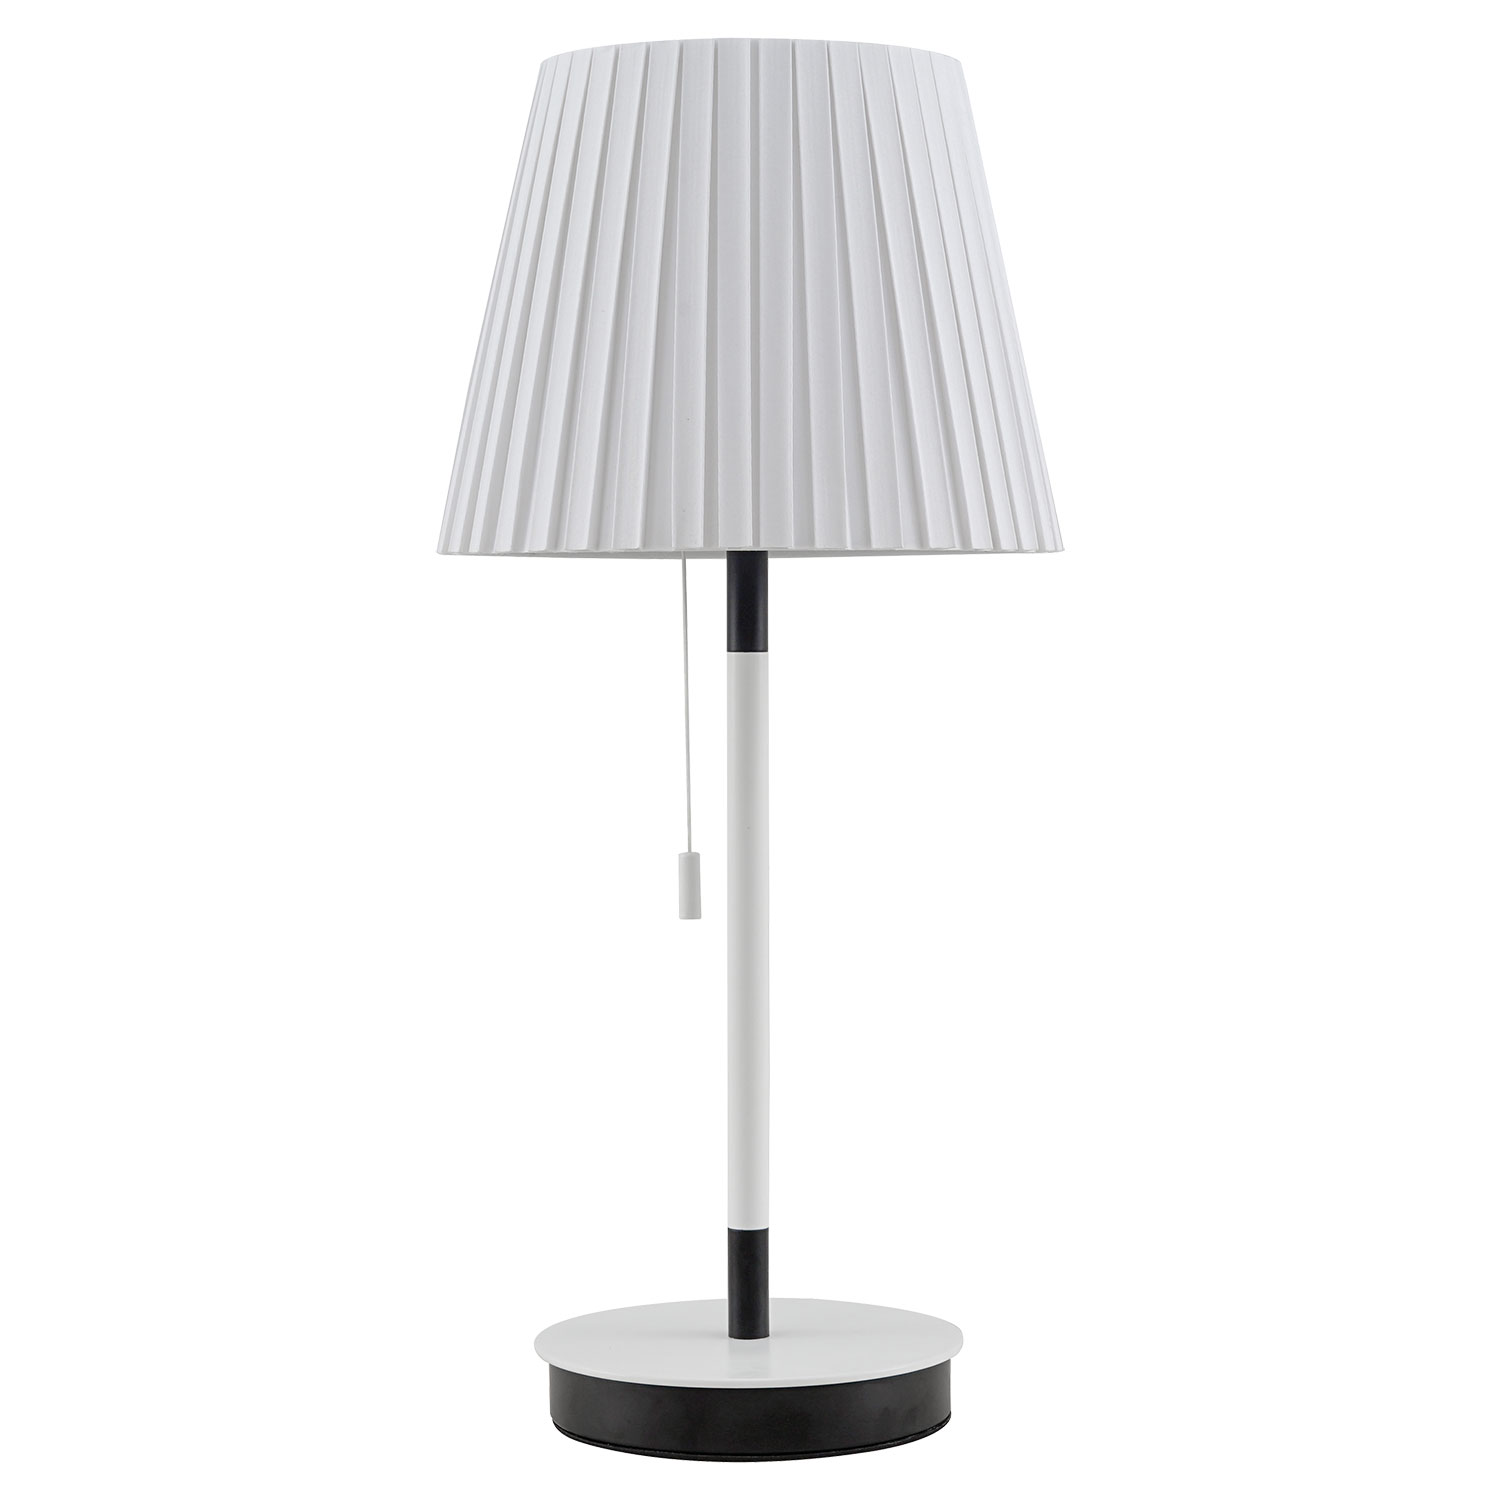 Настольная лампа Lussole Cozy LSP-0570, 23*50 см, белый